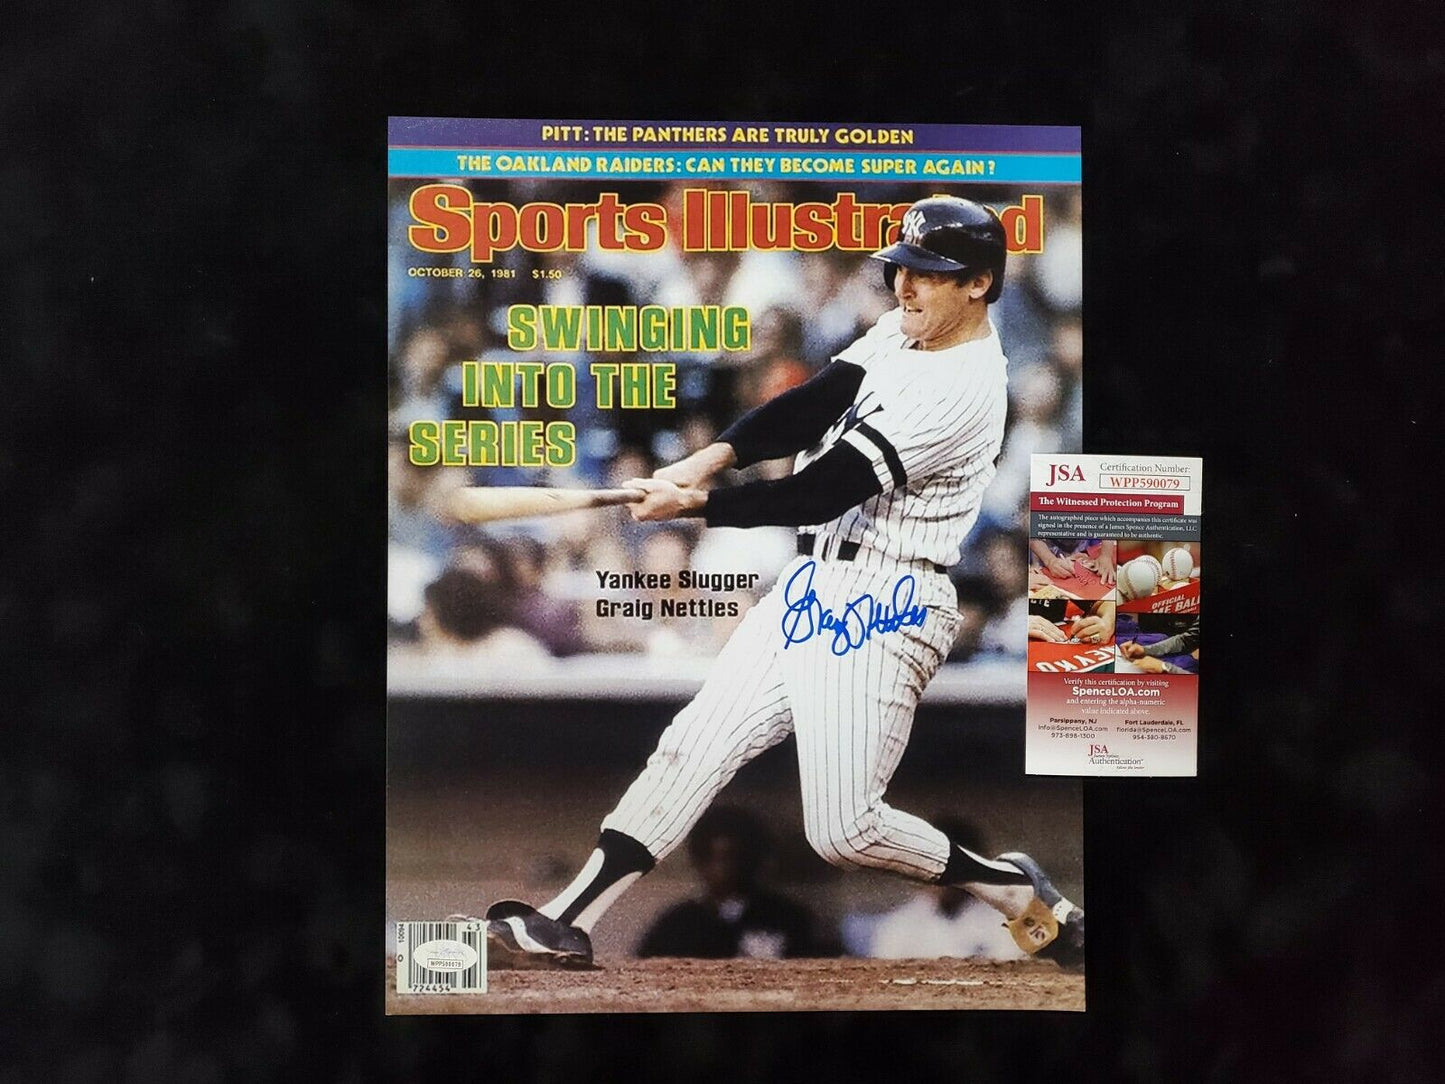 MVP Authentics New York Yankees Graig Nettles Autographed Signed 11X14 Photo Jsa Coa 49.50 sports jersey framing , jersey framing